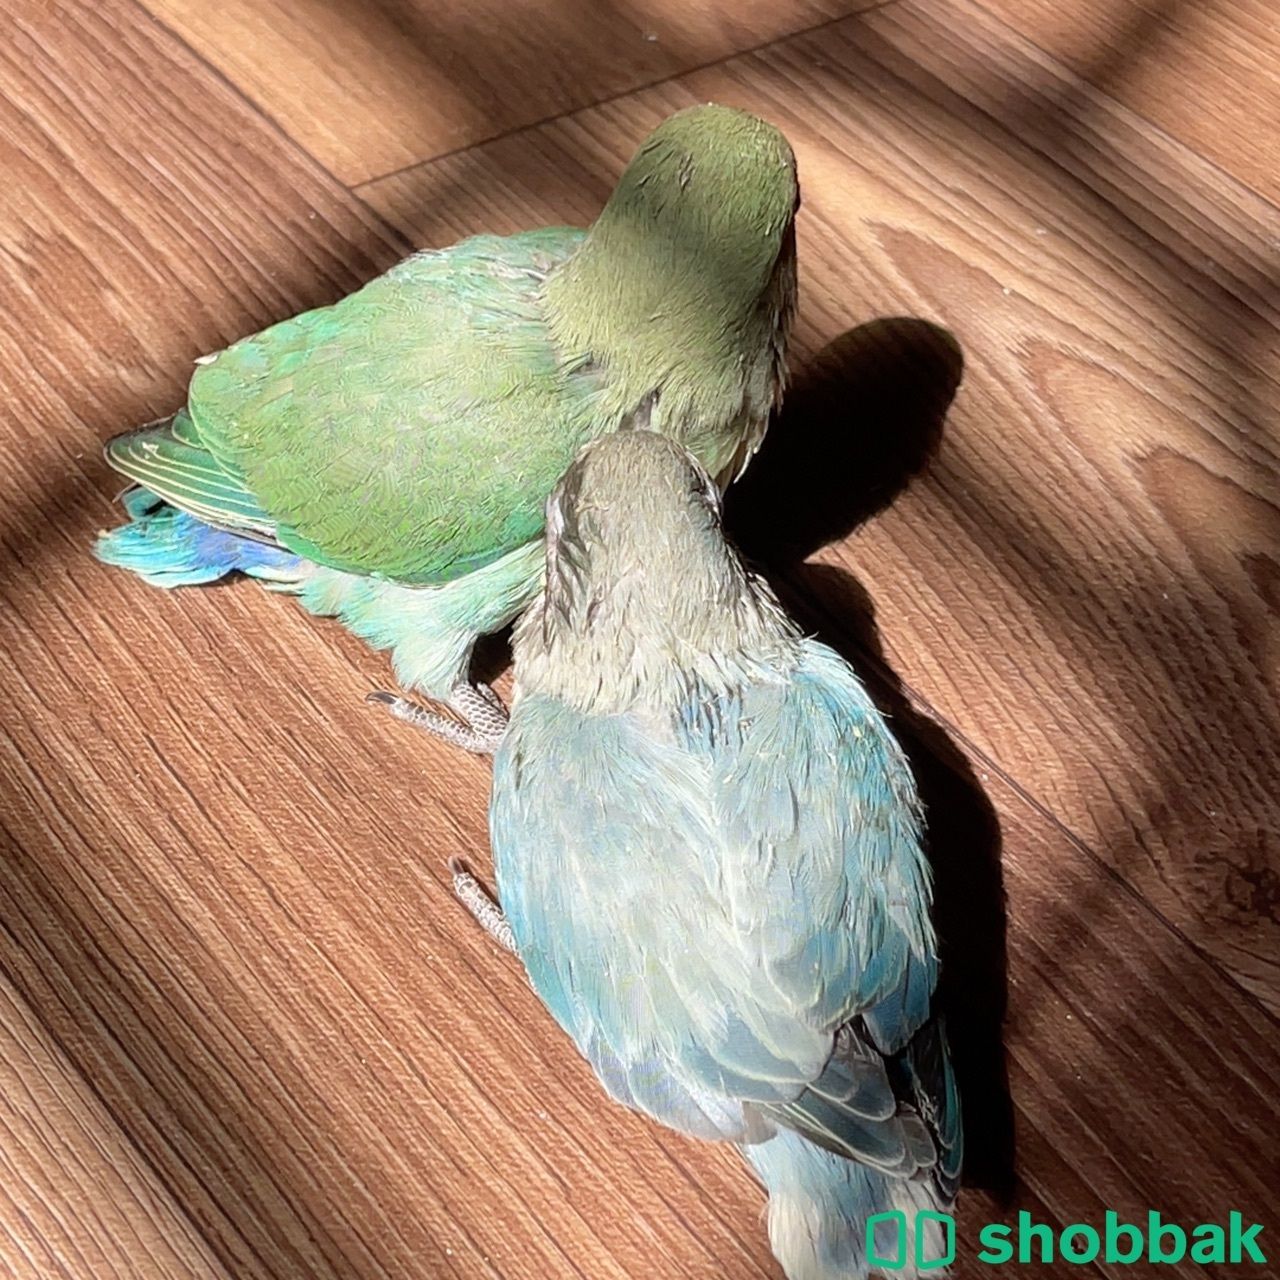 طيور روز Shobbak Saudi Arabia